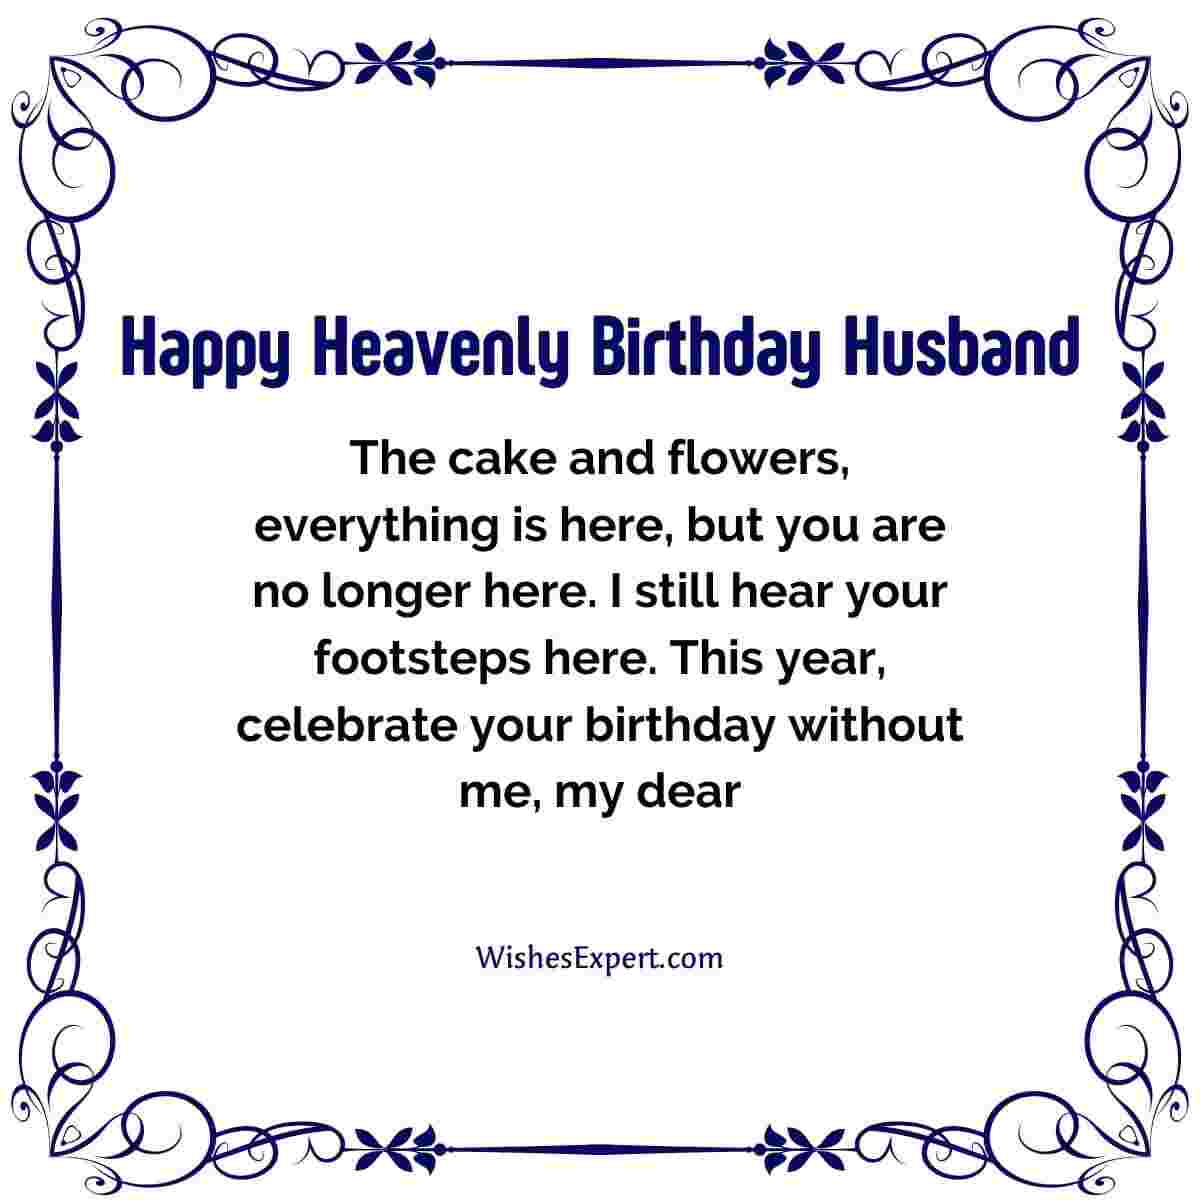 Happy Birthday in Heaven Husband